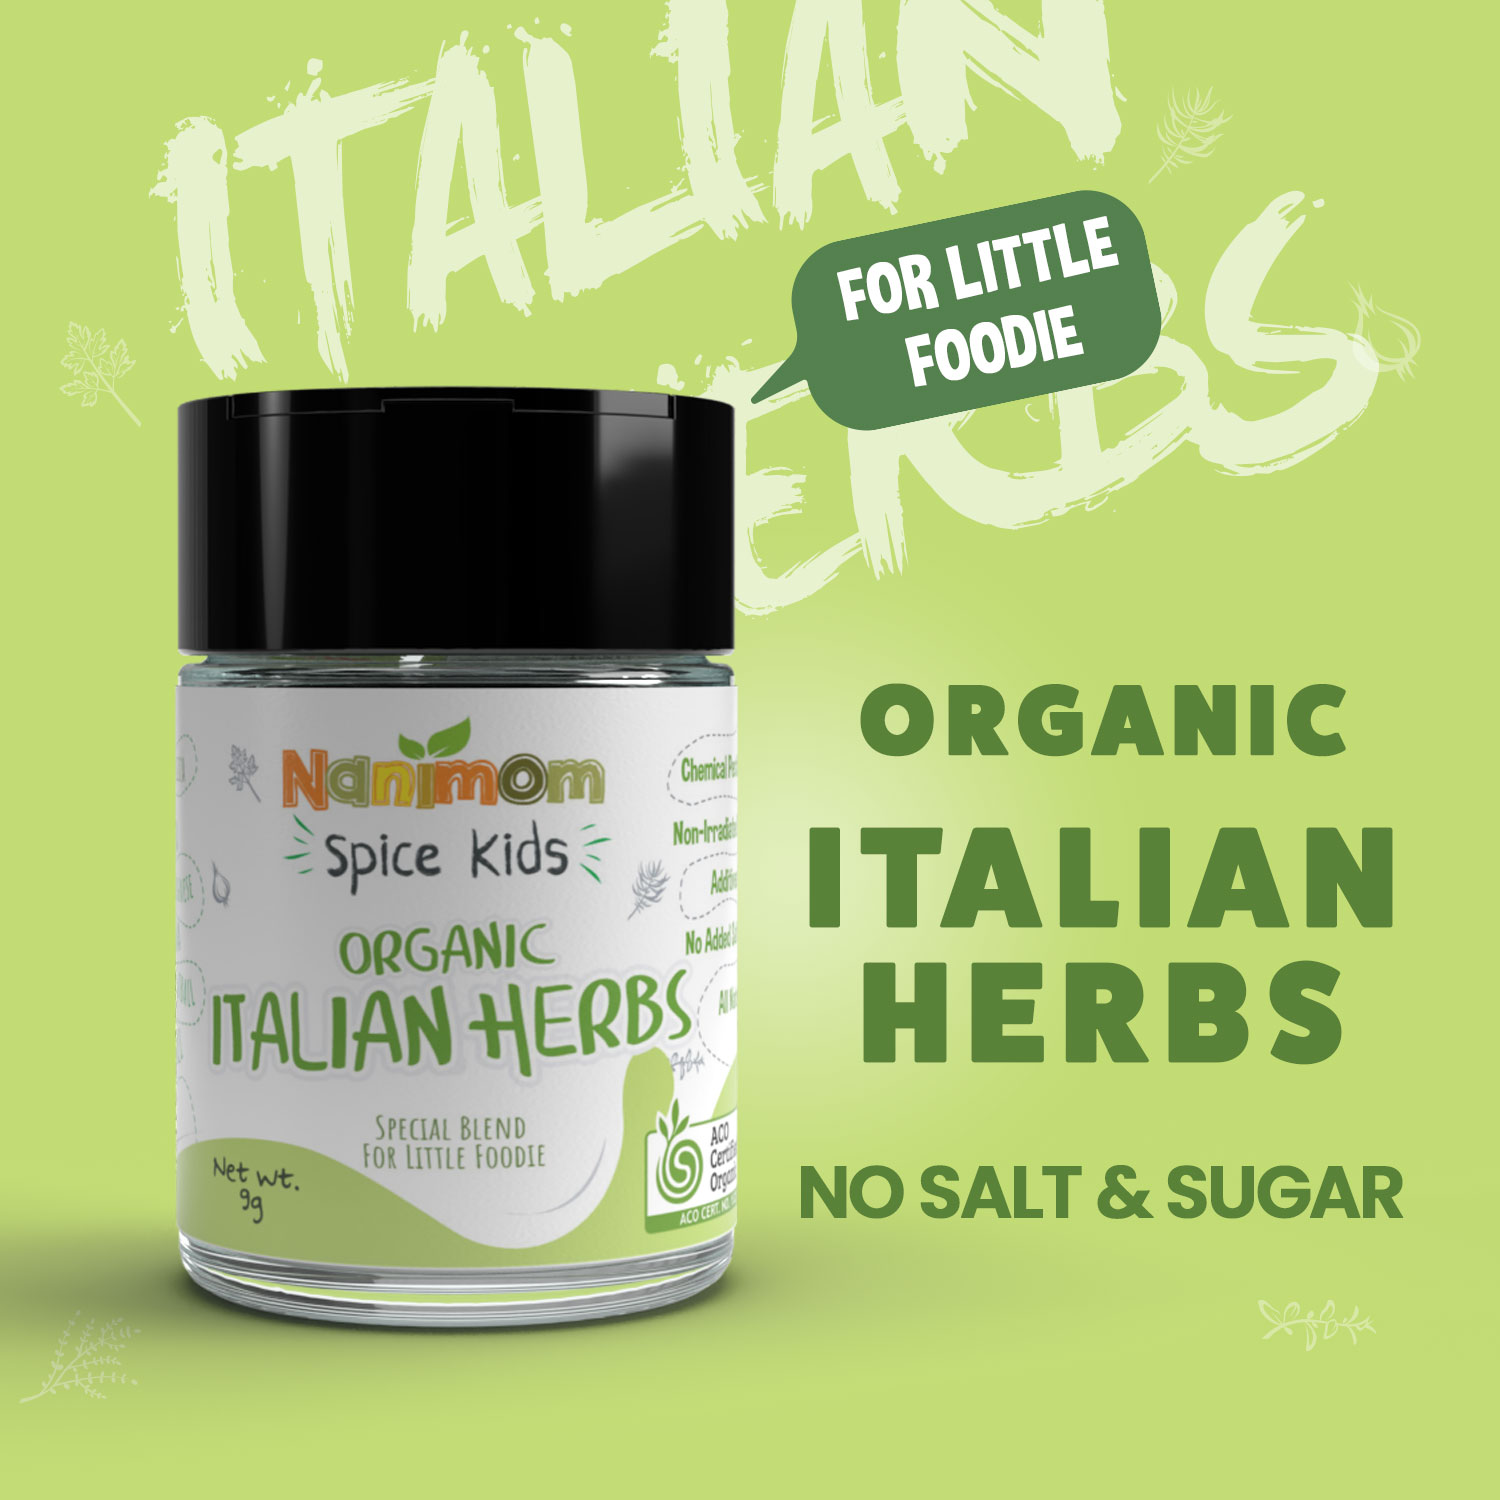 Nanimom Spice Kids Organic Italian Herbs 12g